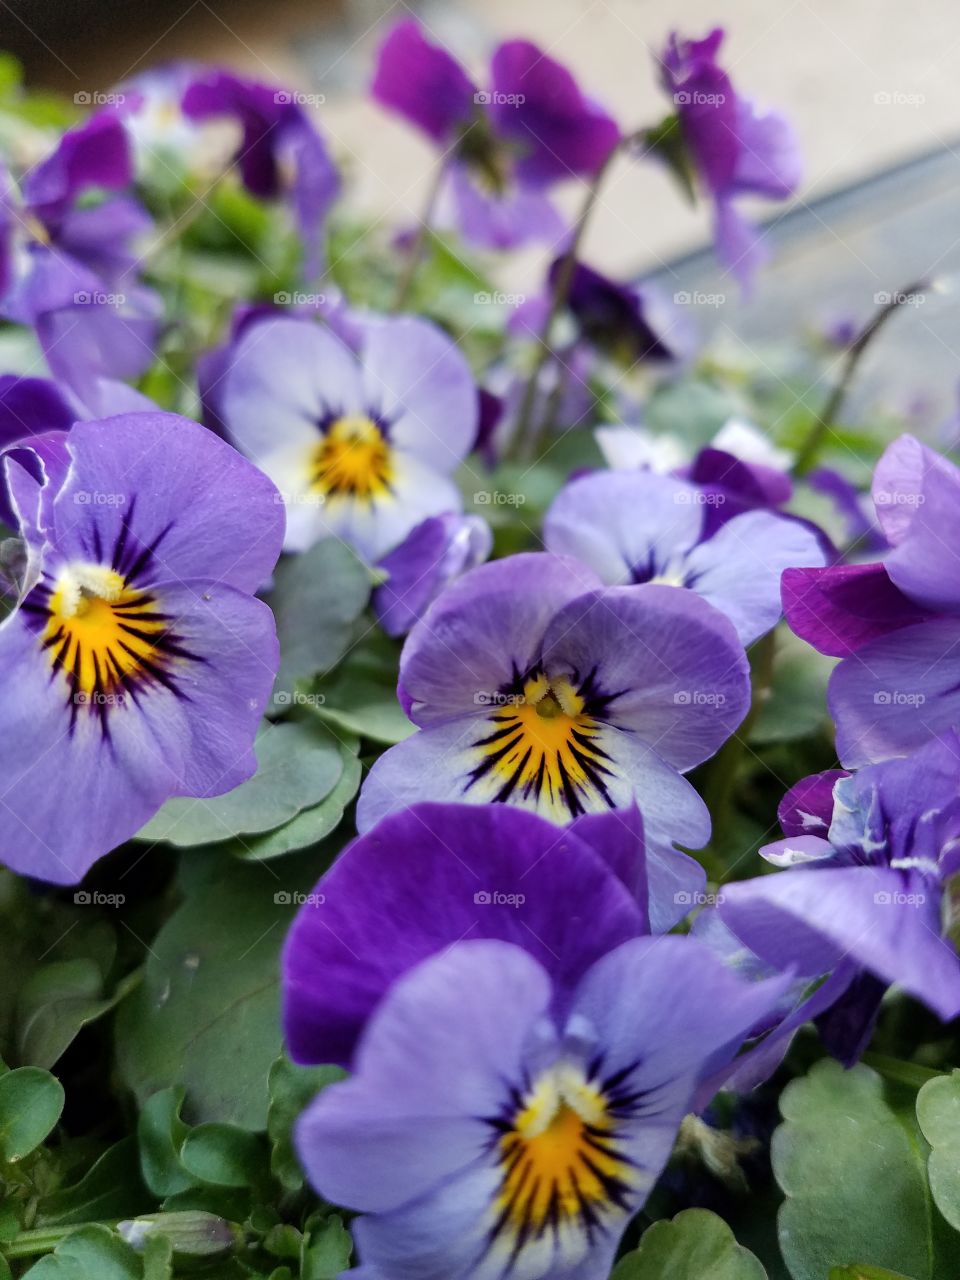 Close-up of violet violas in bloom